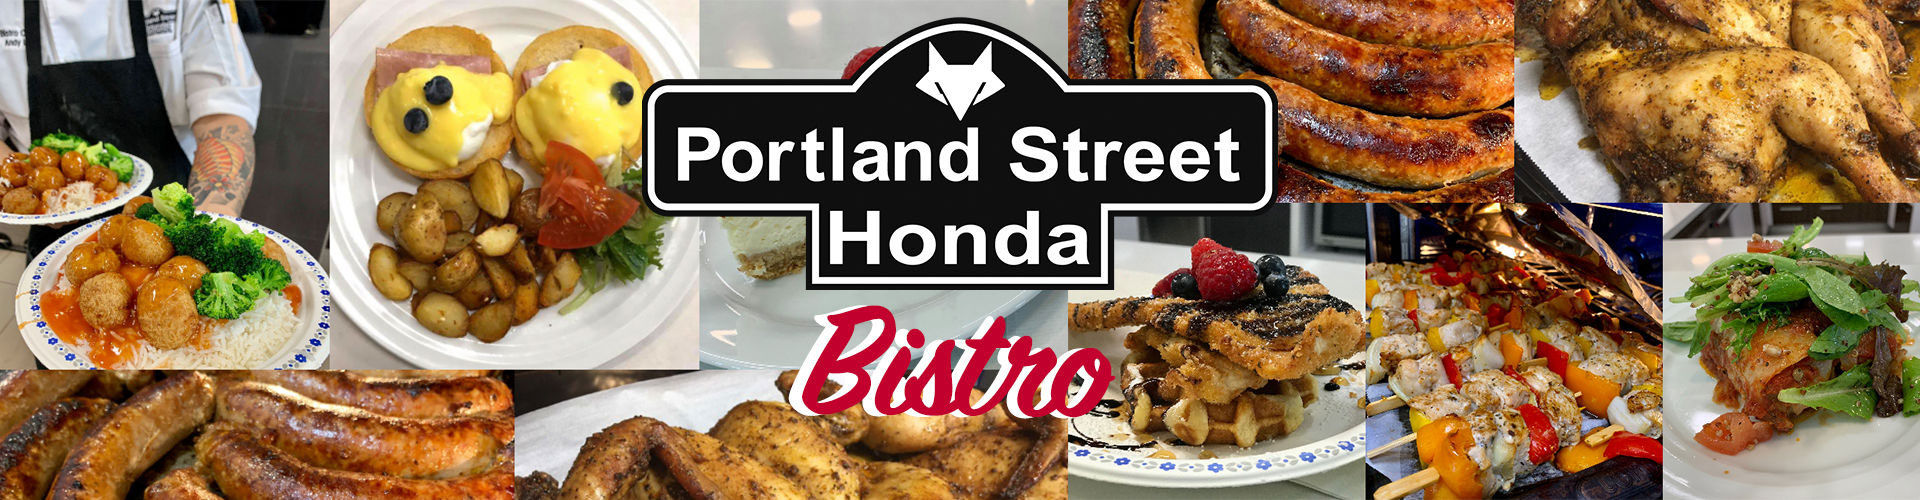 Portland Street Honda Bistro